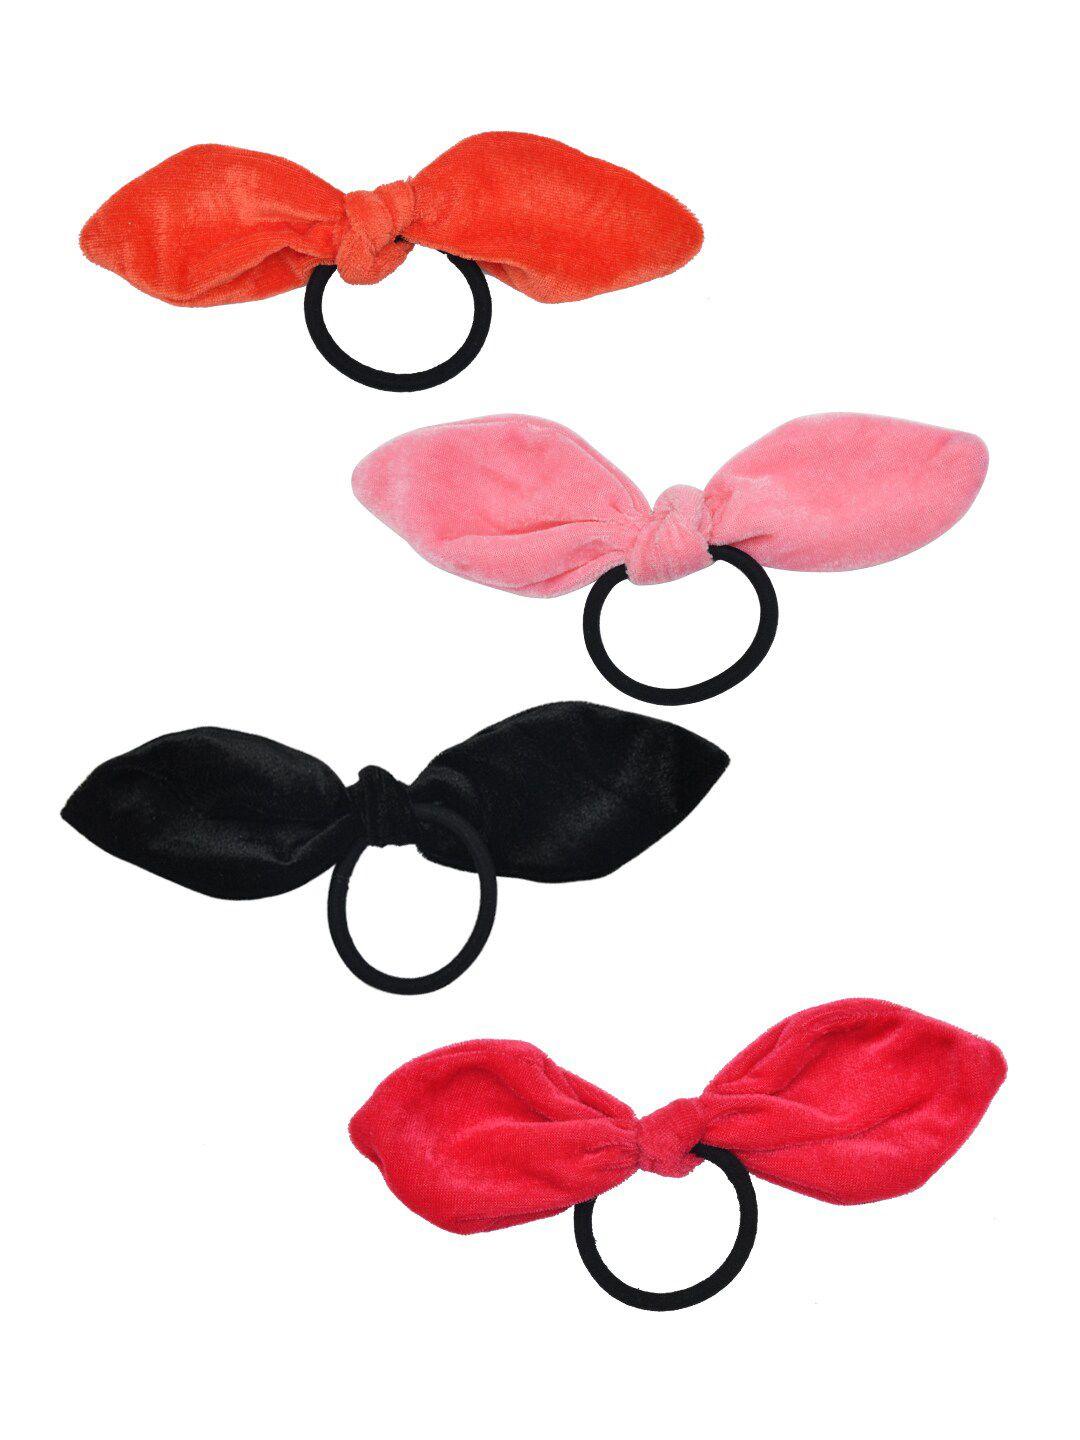 funkrafts girls red & pink set of 4 ponytail holders